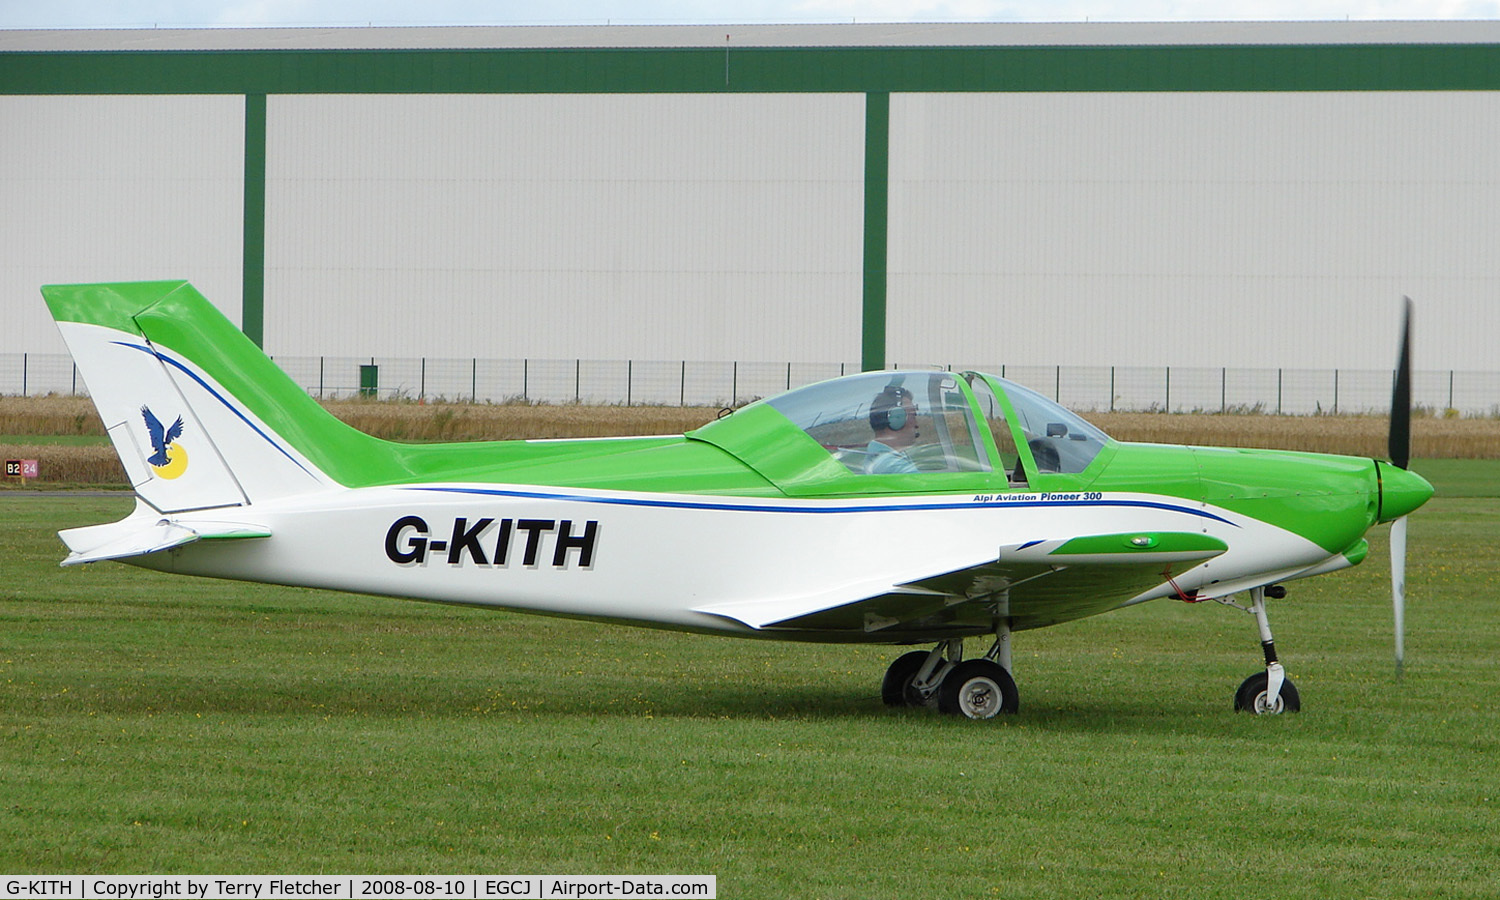 G-KITH, 2006 Alpi Aviation Pioneer 300 C/N PFA 330-14510, Visitor to the 2008 LAA Regional Fly-in at Sherburn